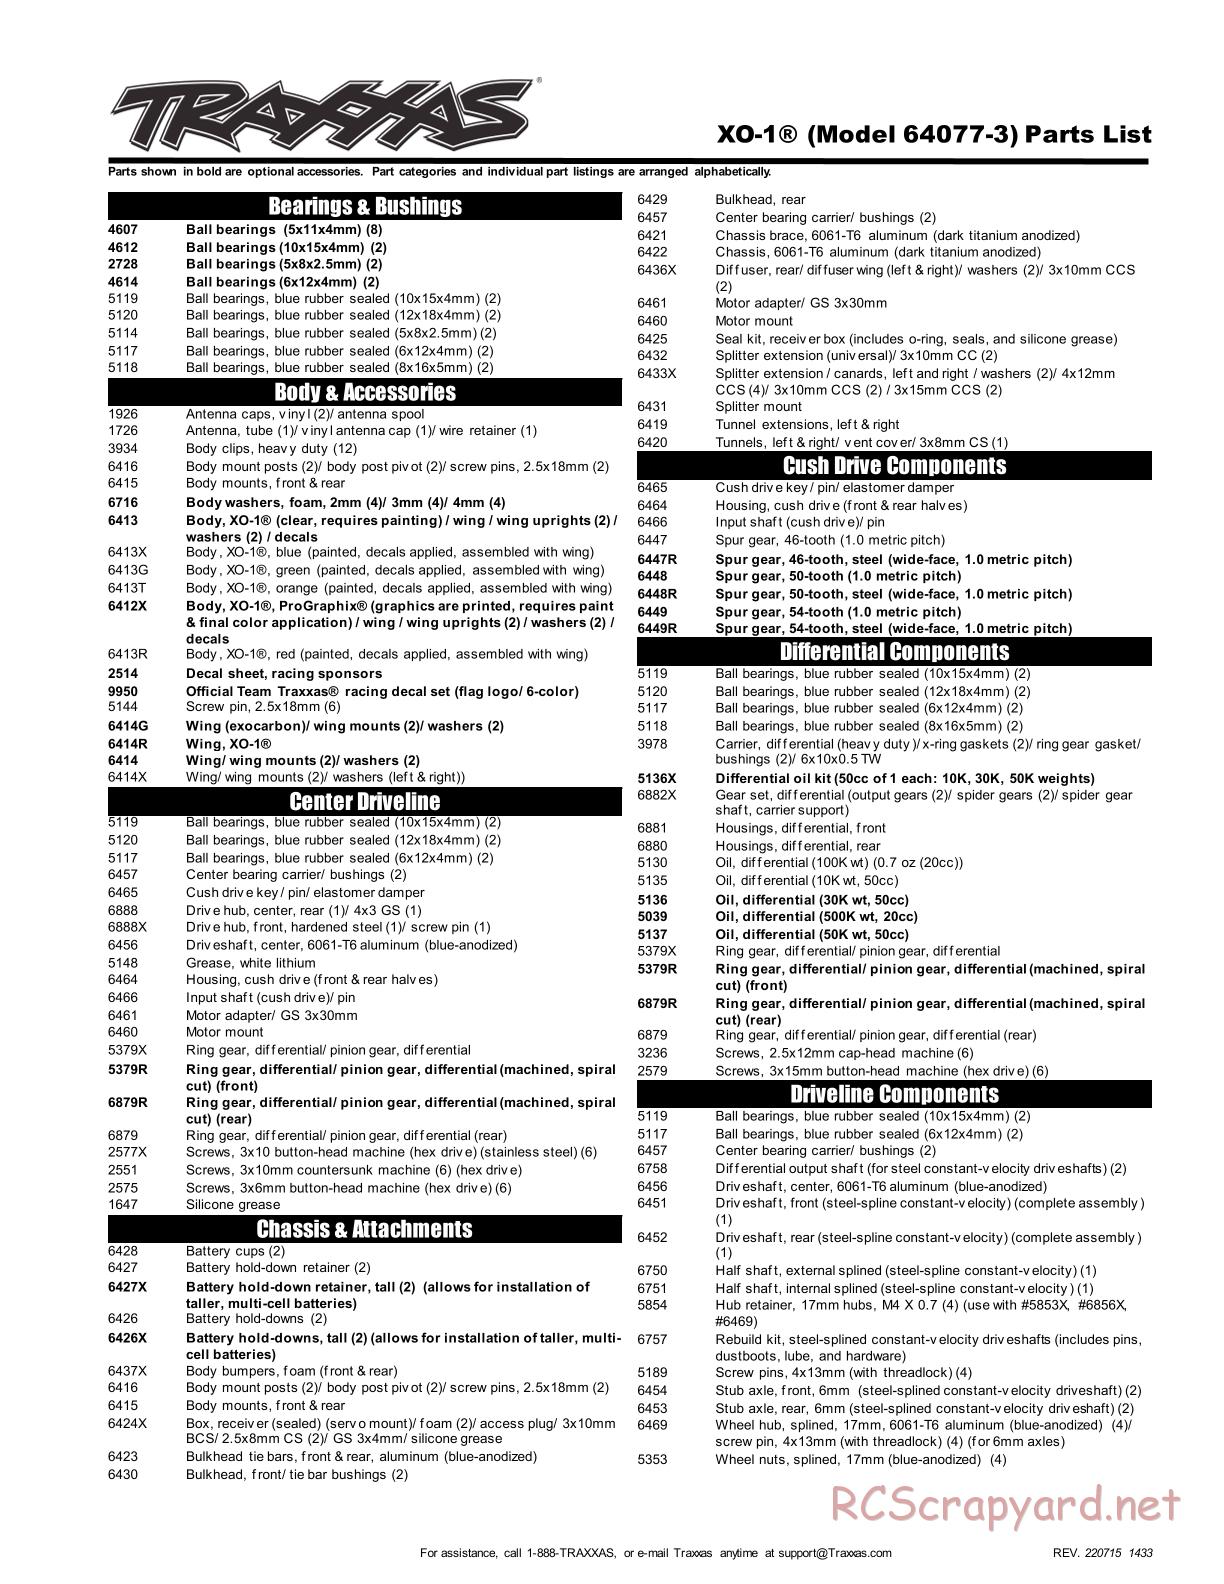 Traxxas - XO-1 TSM - Parts List - Page 1